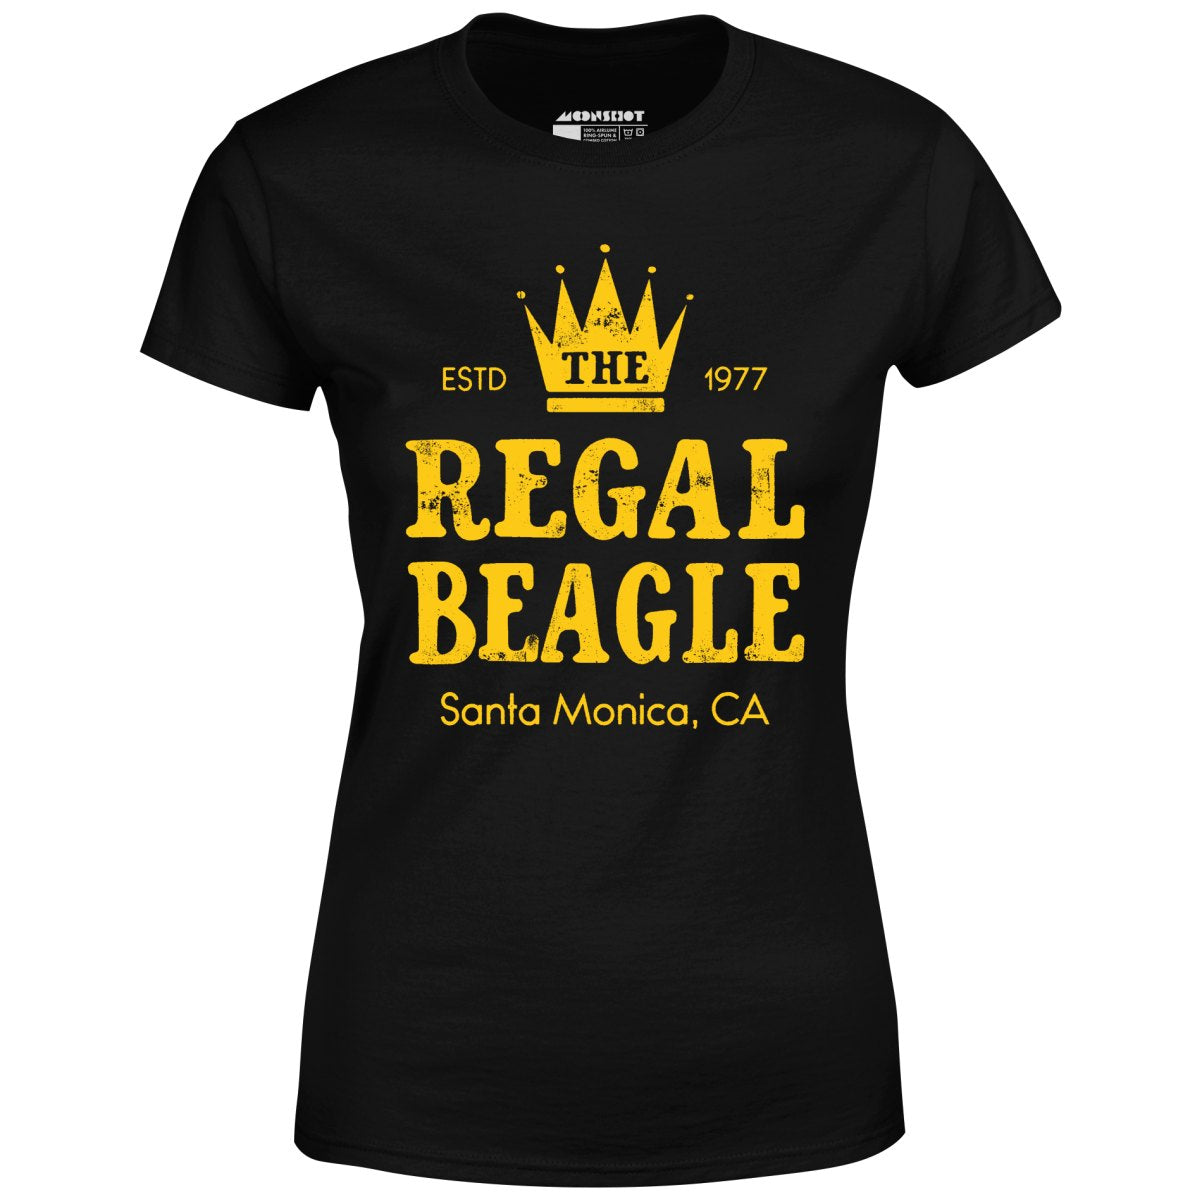 The Regal Beagle - Santa Monica, CA - Women's T-Shirt